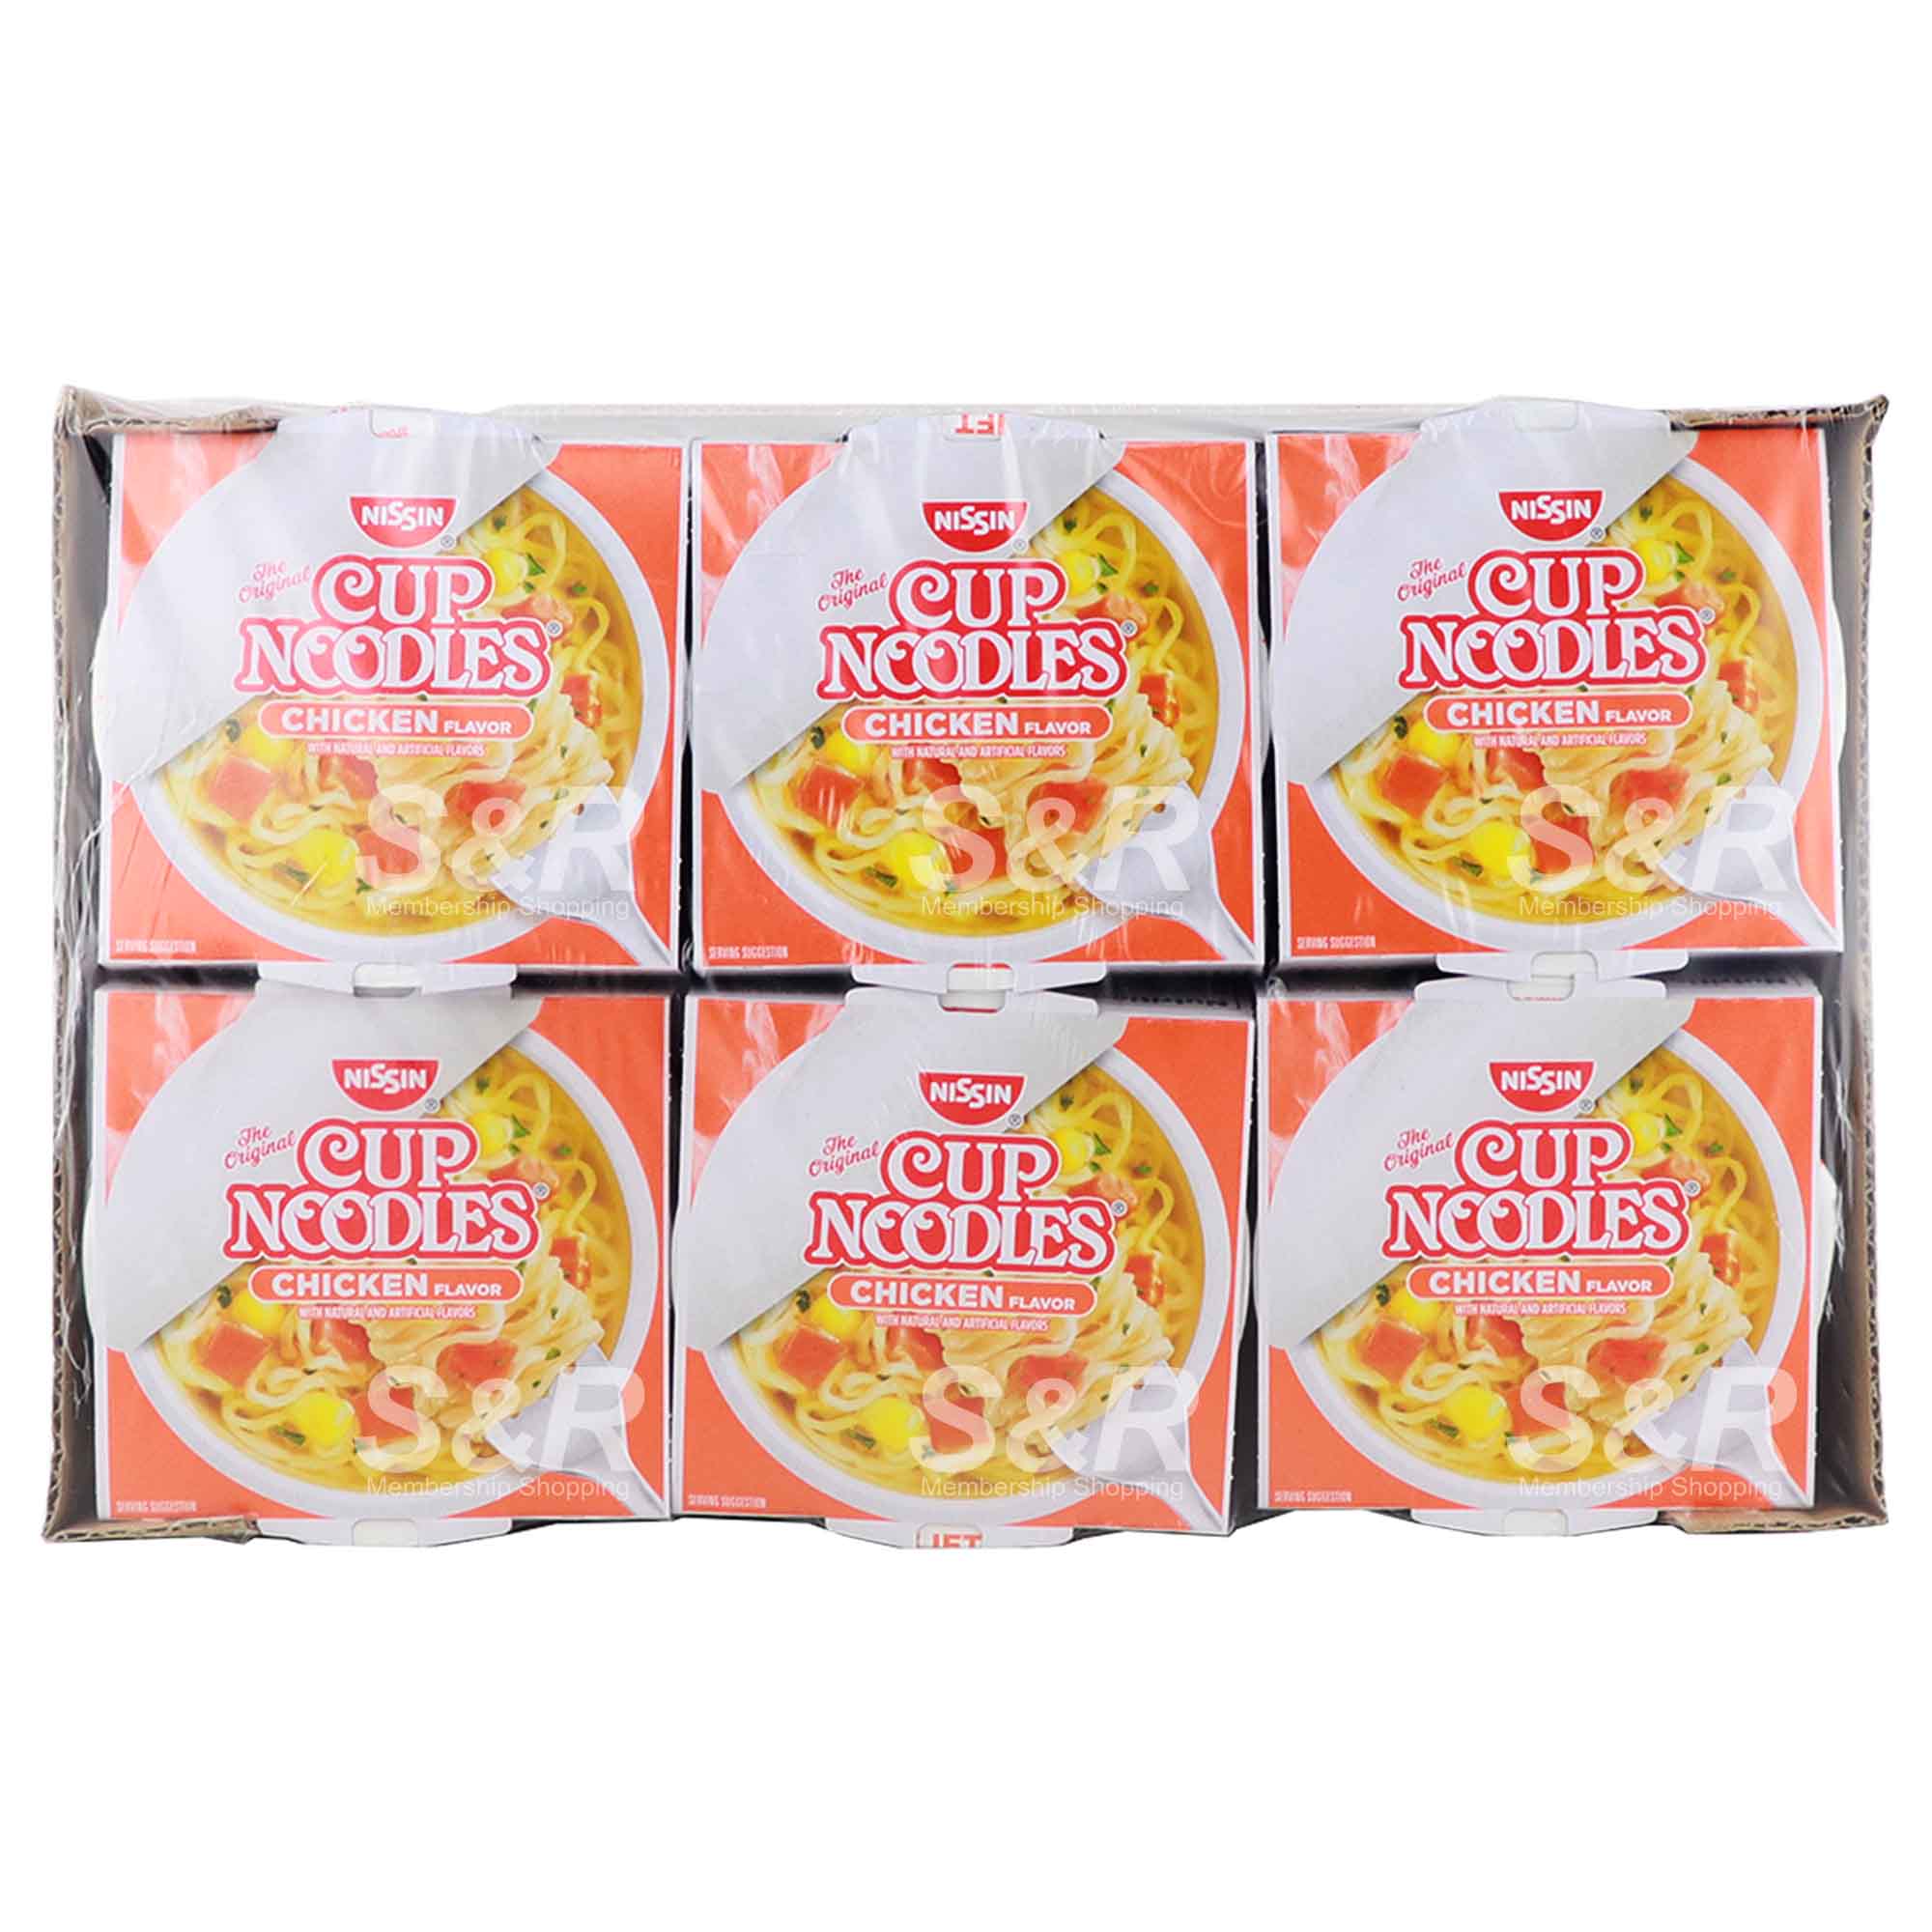 Nissin The Original Cup Noodles Chicken Flavor 6pcs